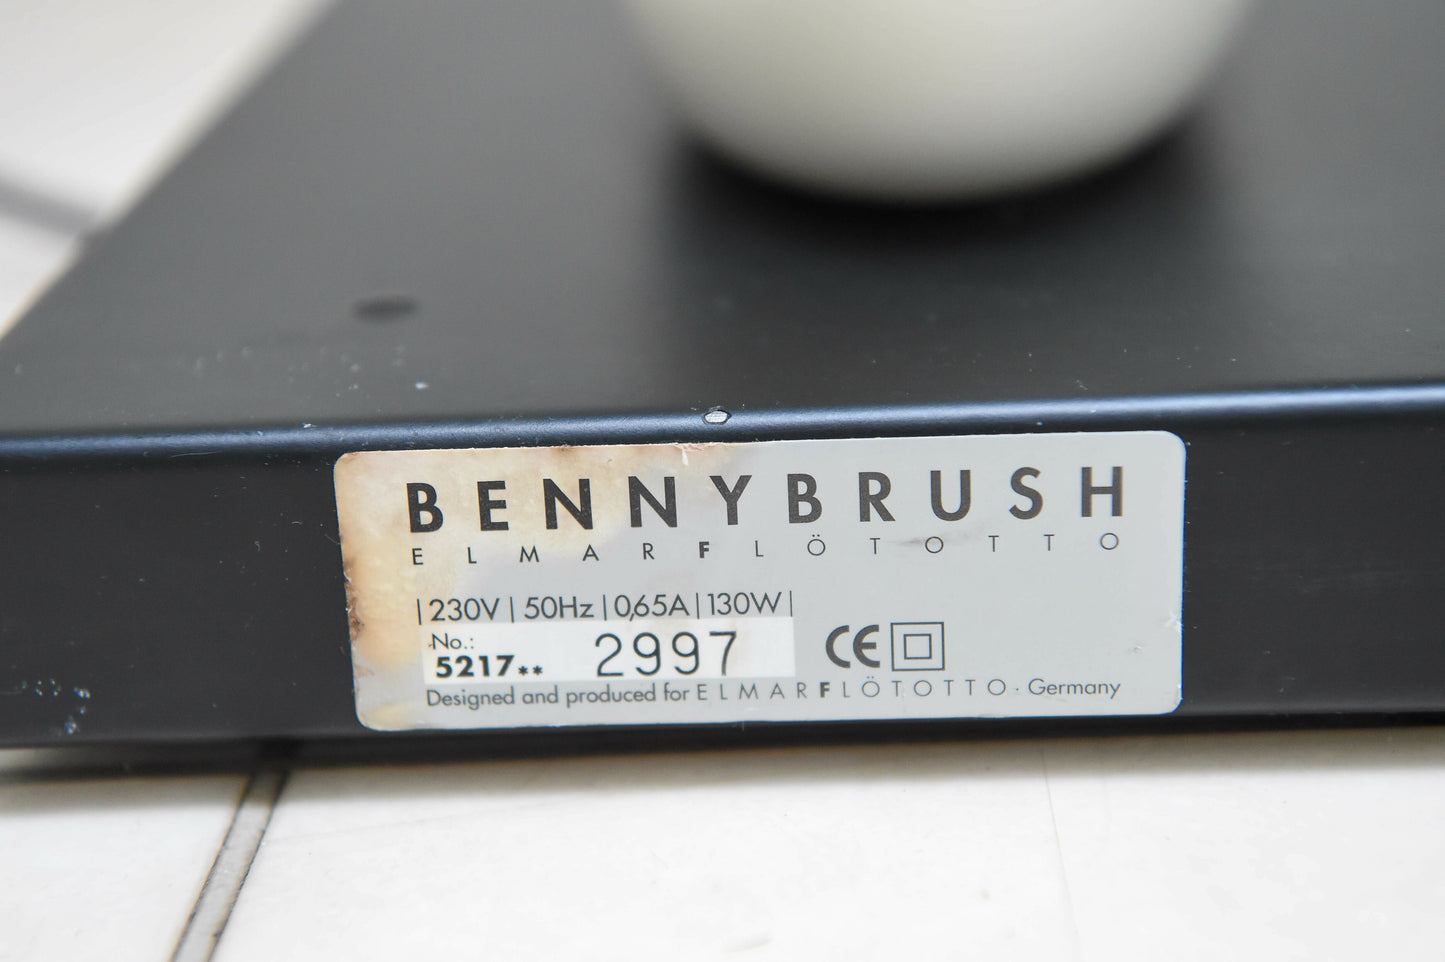 Original 1970's Benny Brush Shoe Polishing Machine By German Manufacturer Elmar Flototto